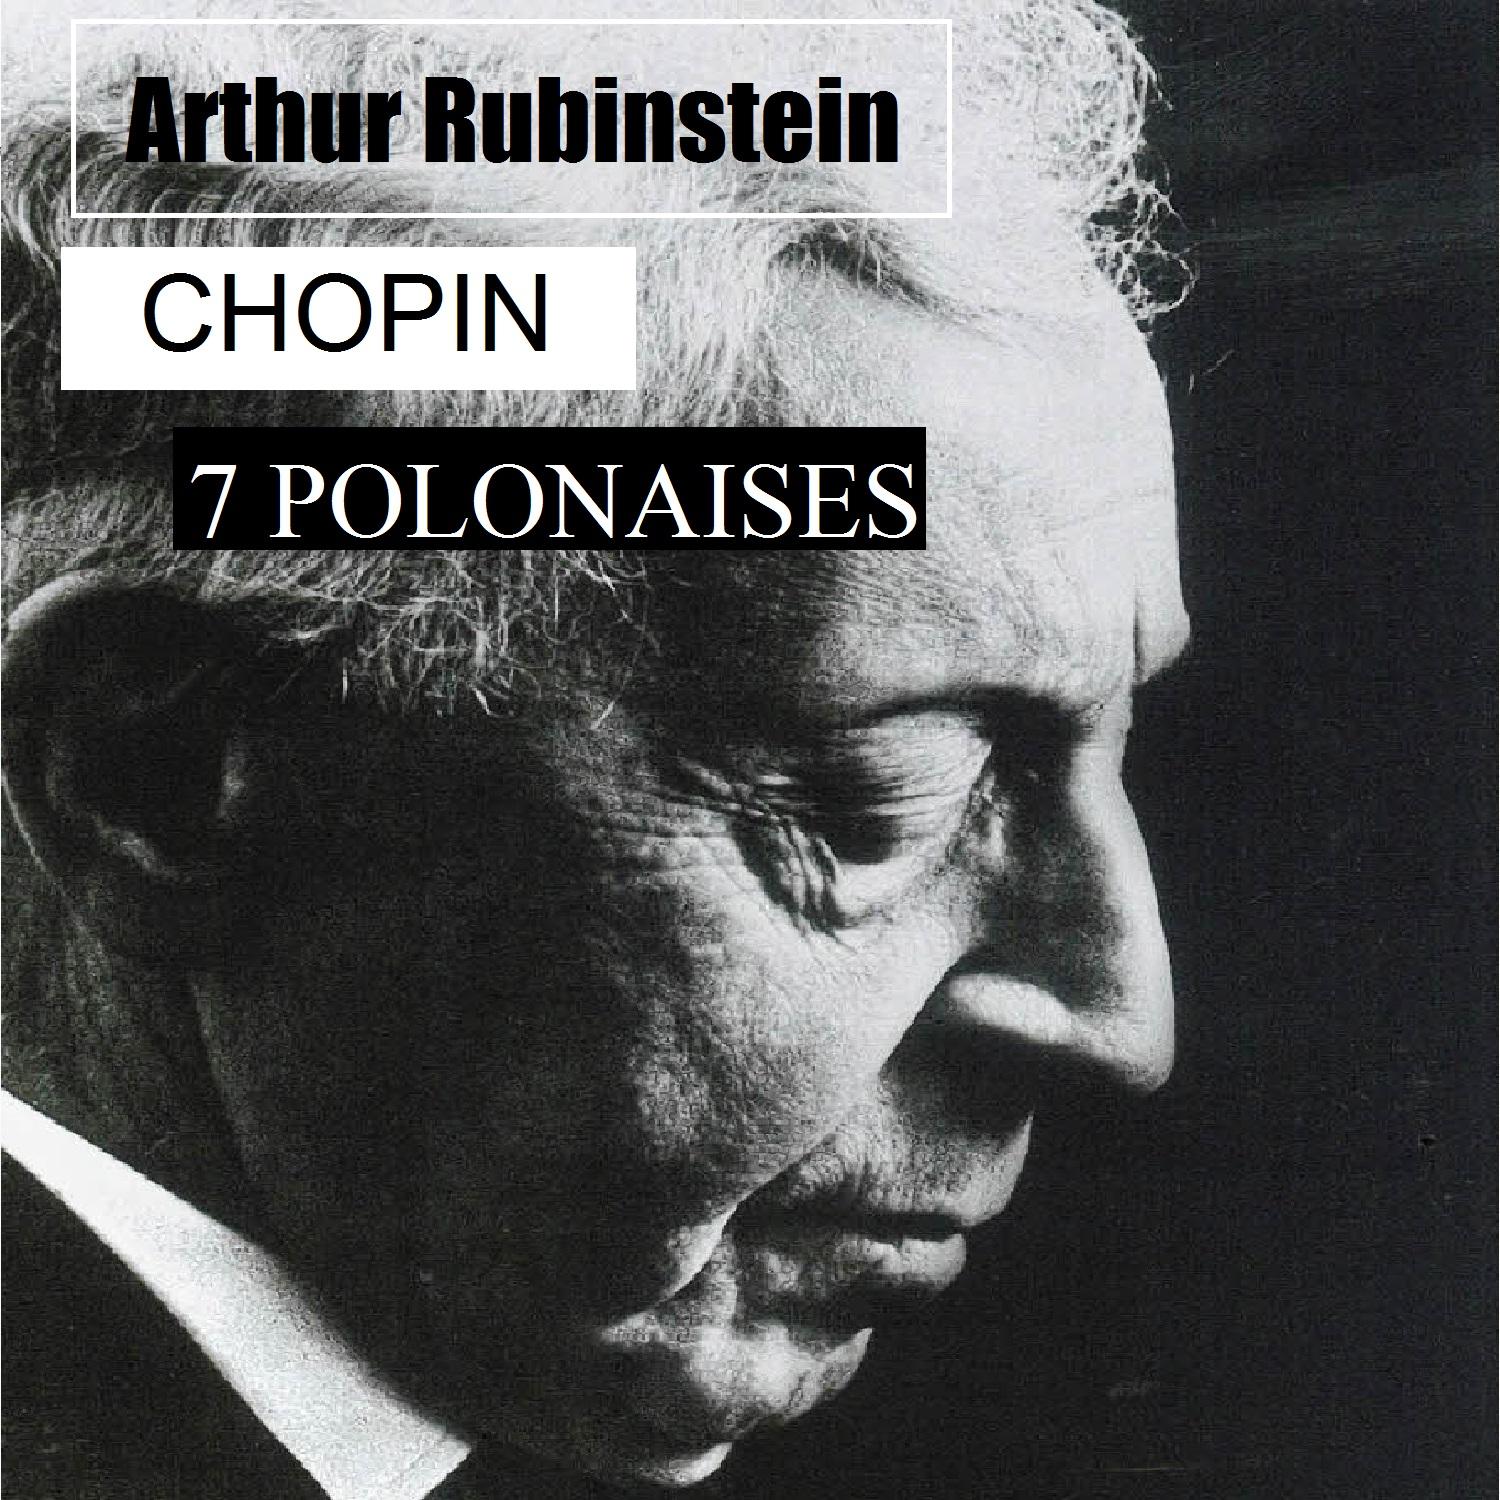 Arthur Rubinstein - Chopin - 7 Polonaises